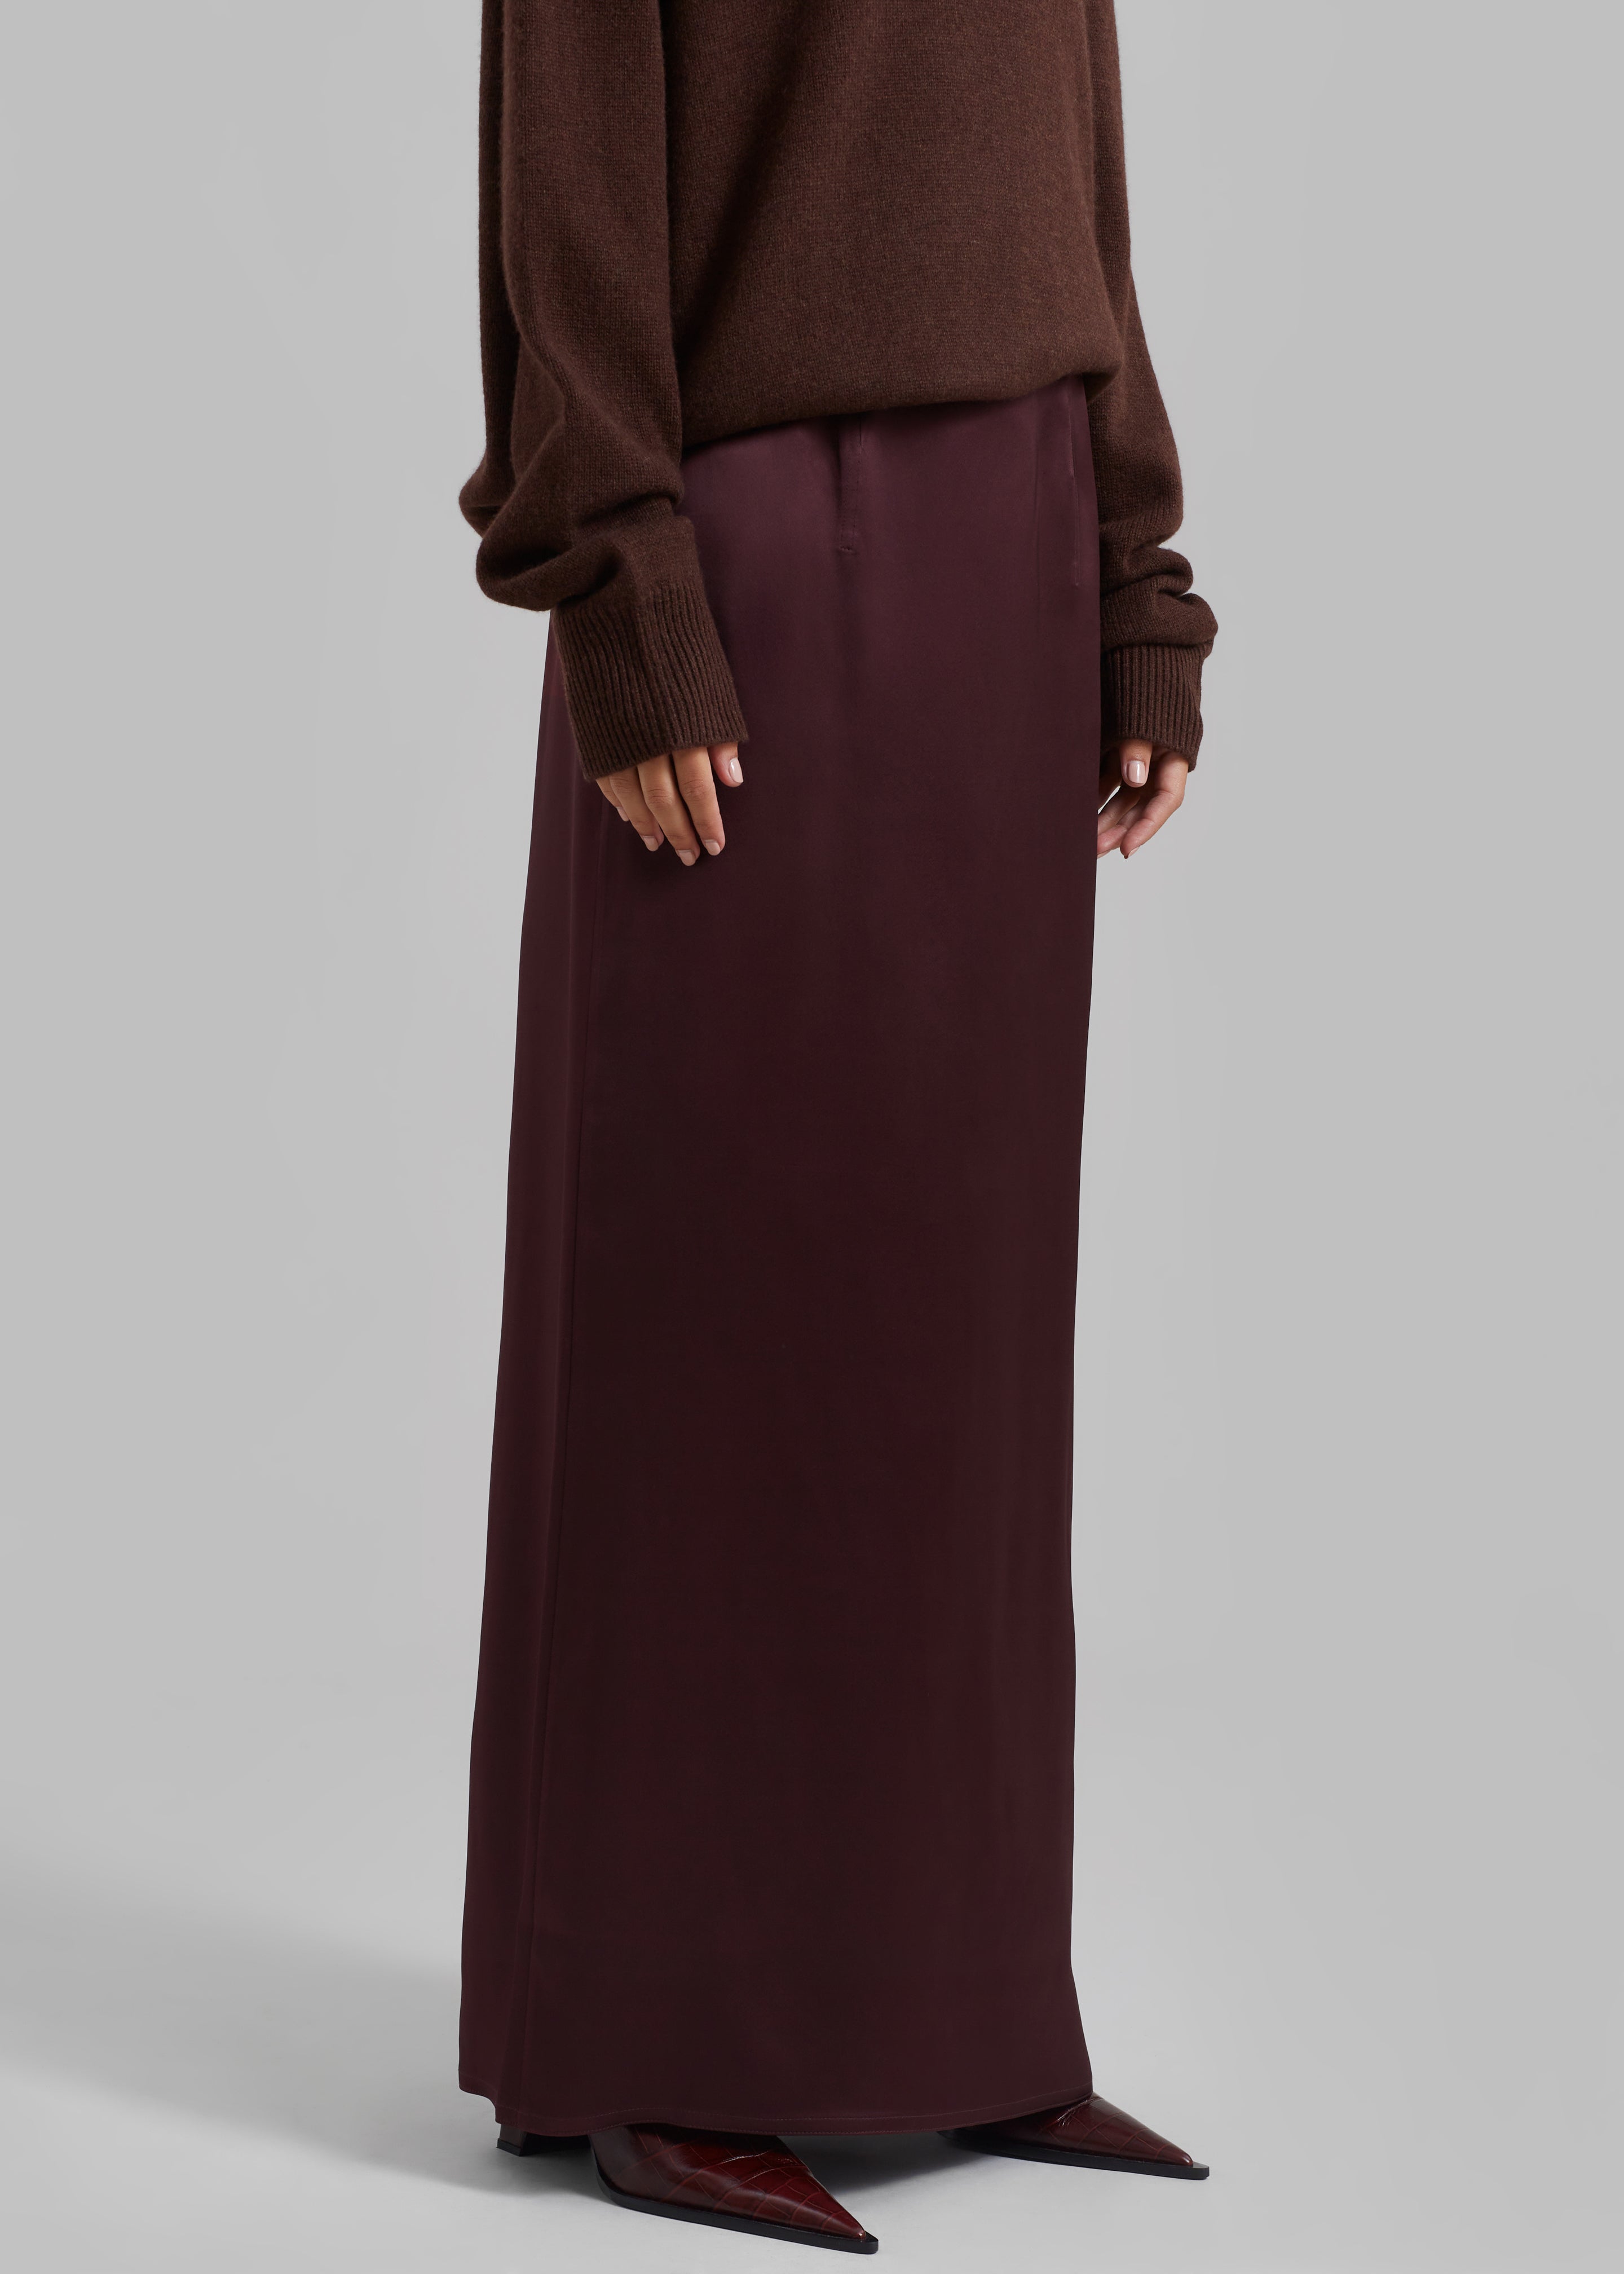 Bevza Ankle Length Skirt - Burgundy Brown - 6